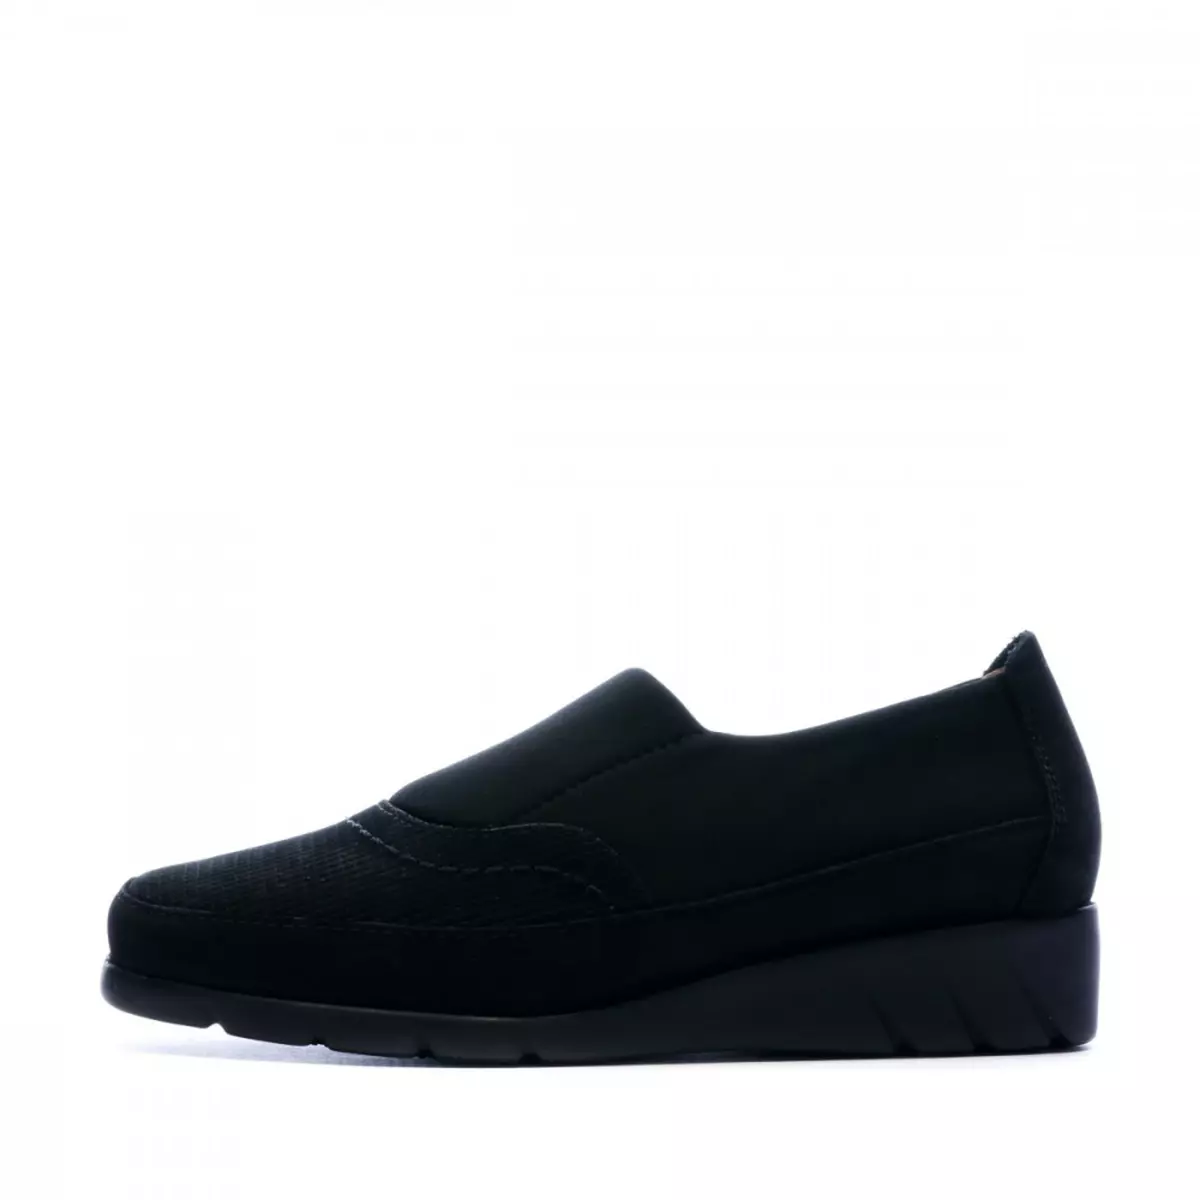  Chaussures de confort Noir Femme Luxat Emane